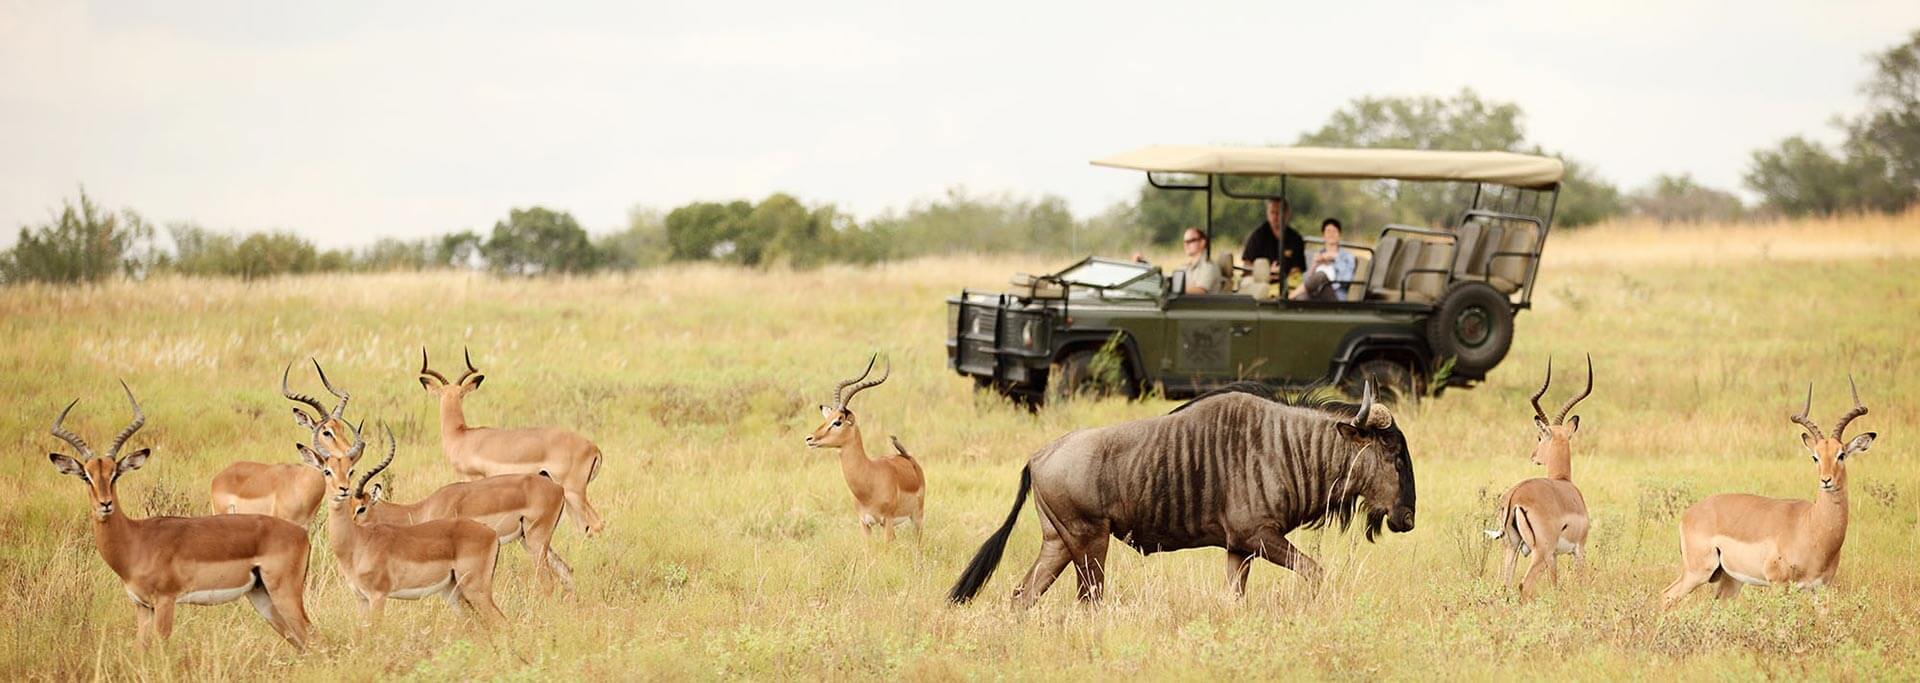 Wildebeest and impala on safari game drive at Camp Jabulani